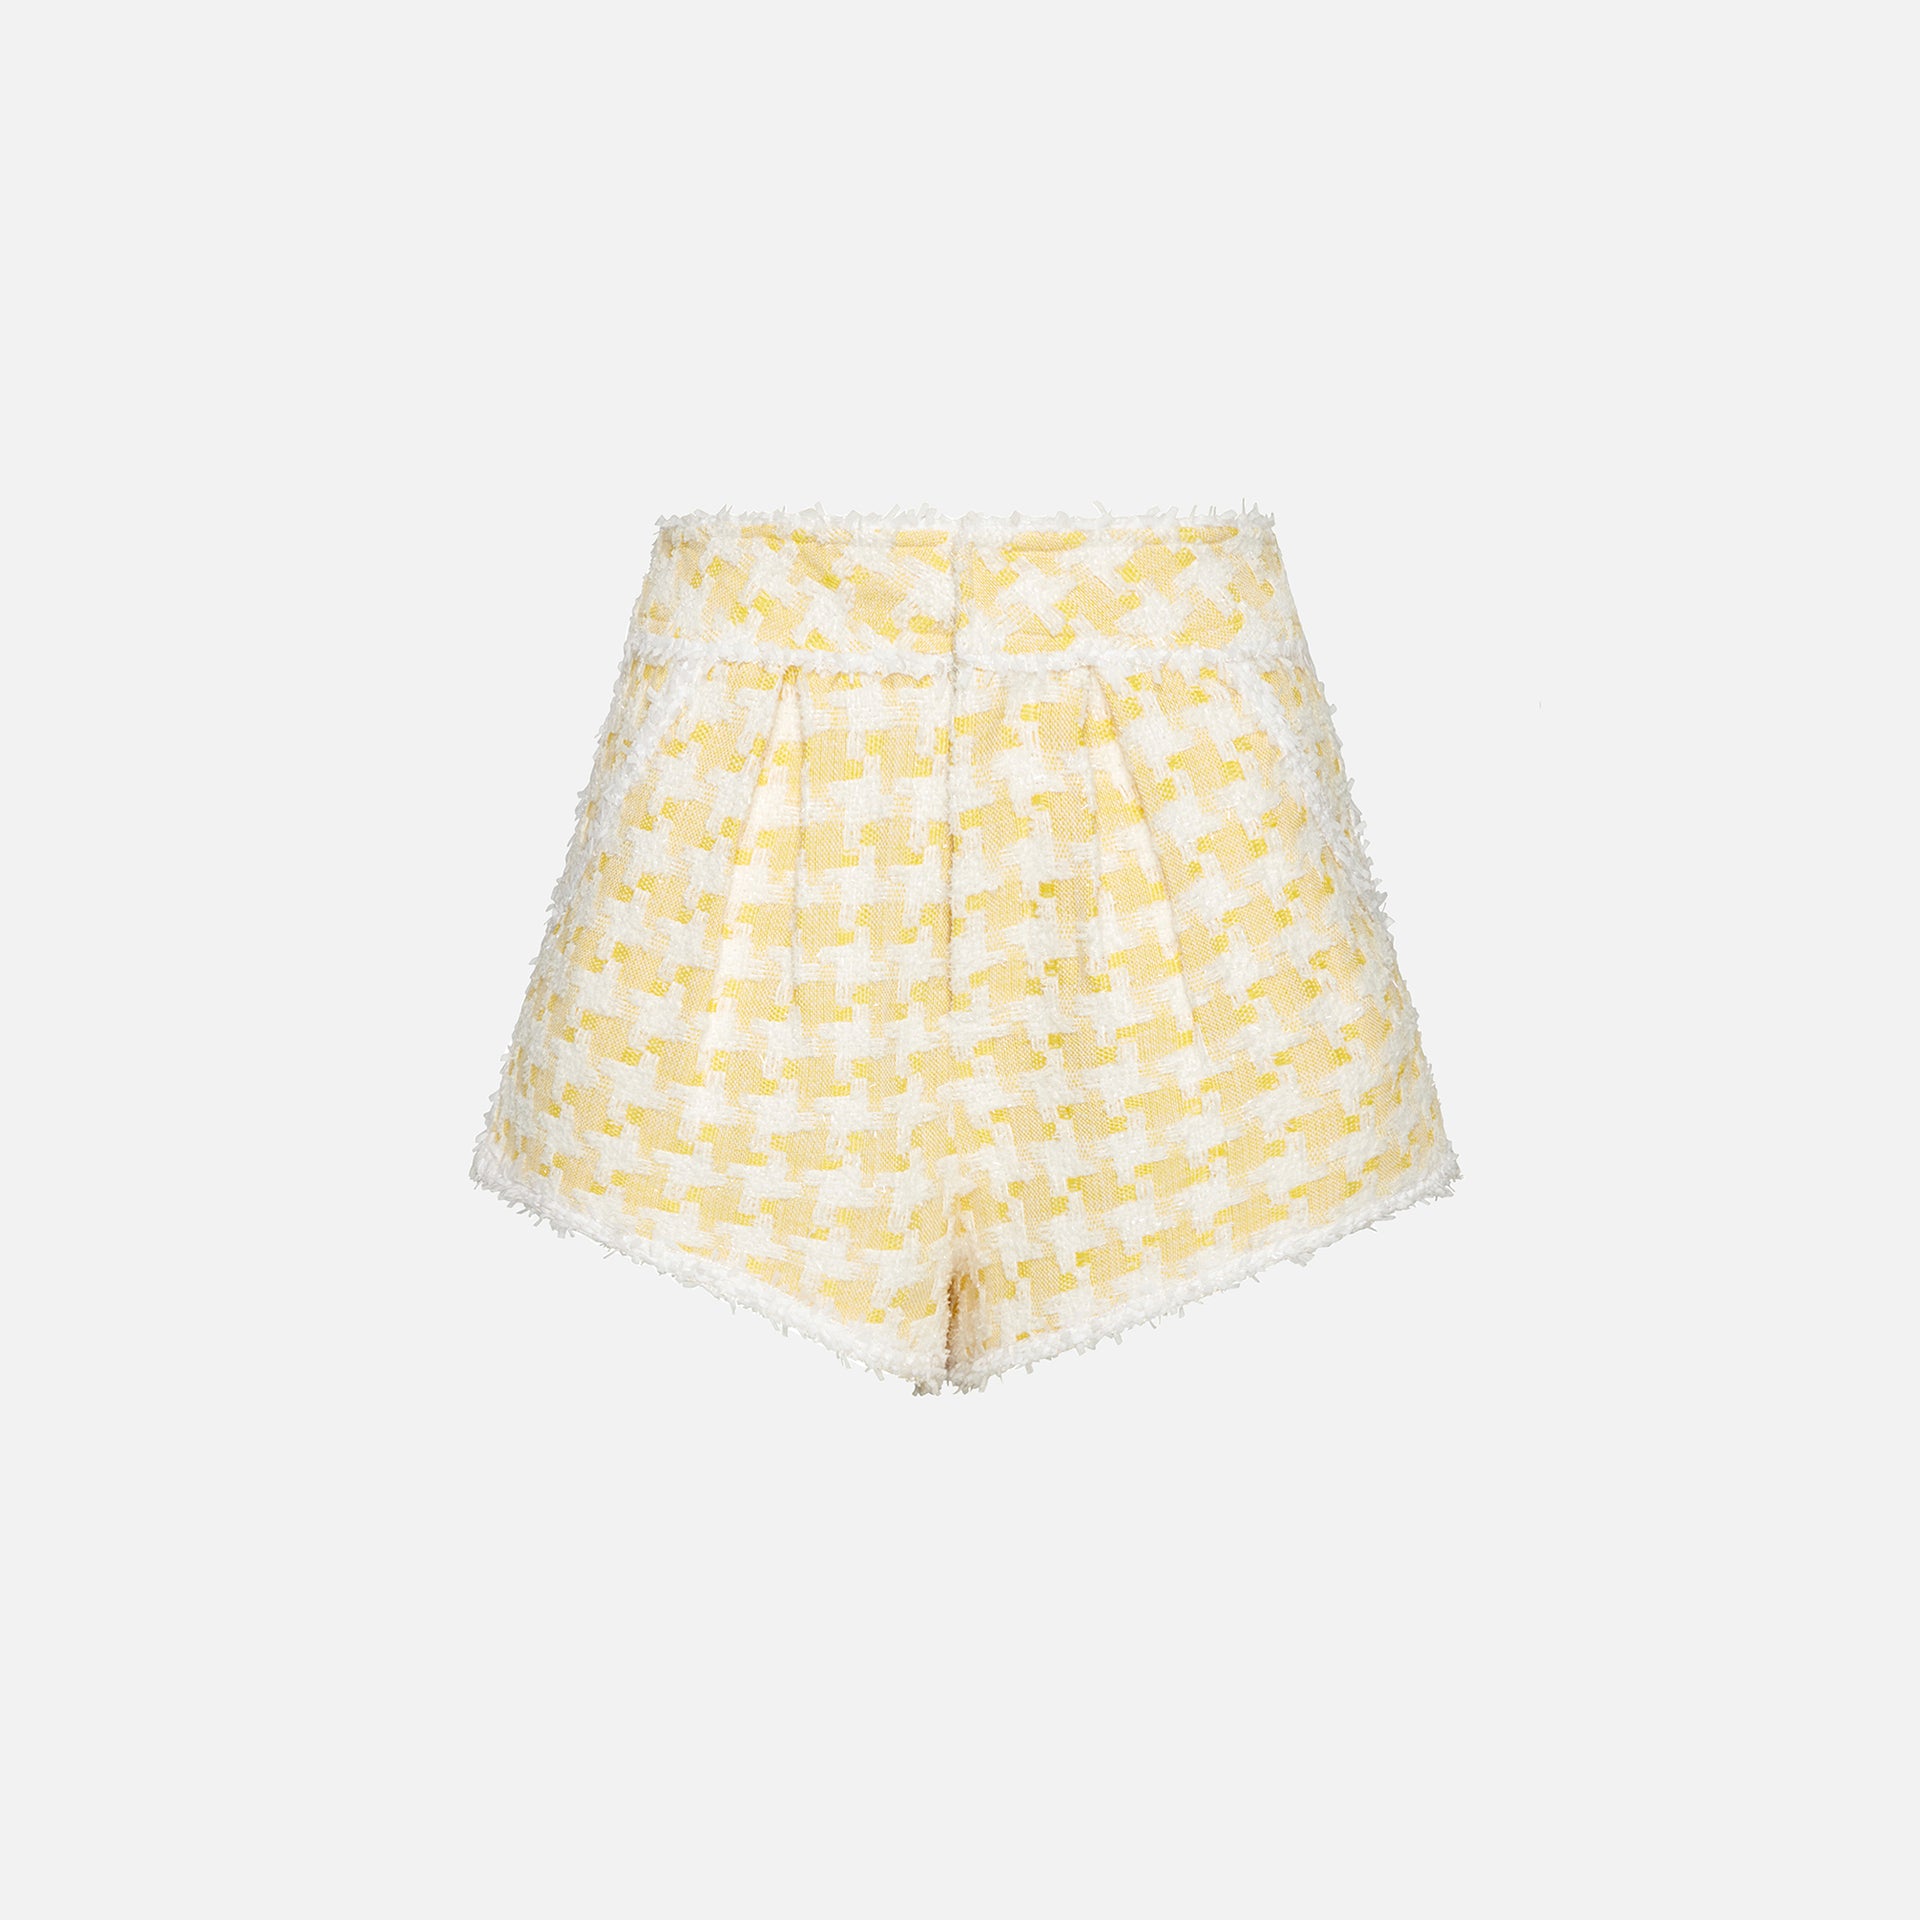 Retrofete Adri Shorts - Yellow / White